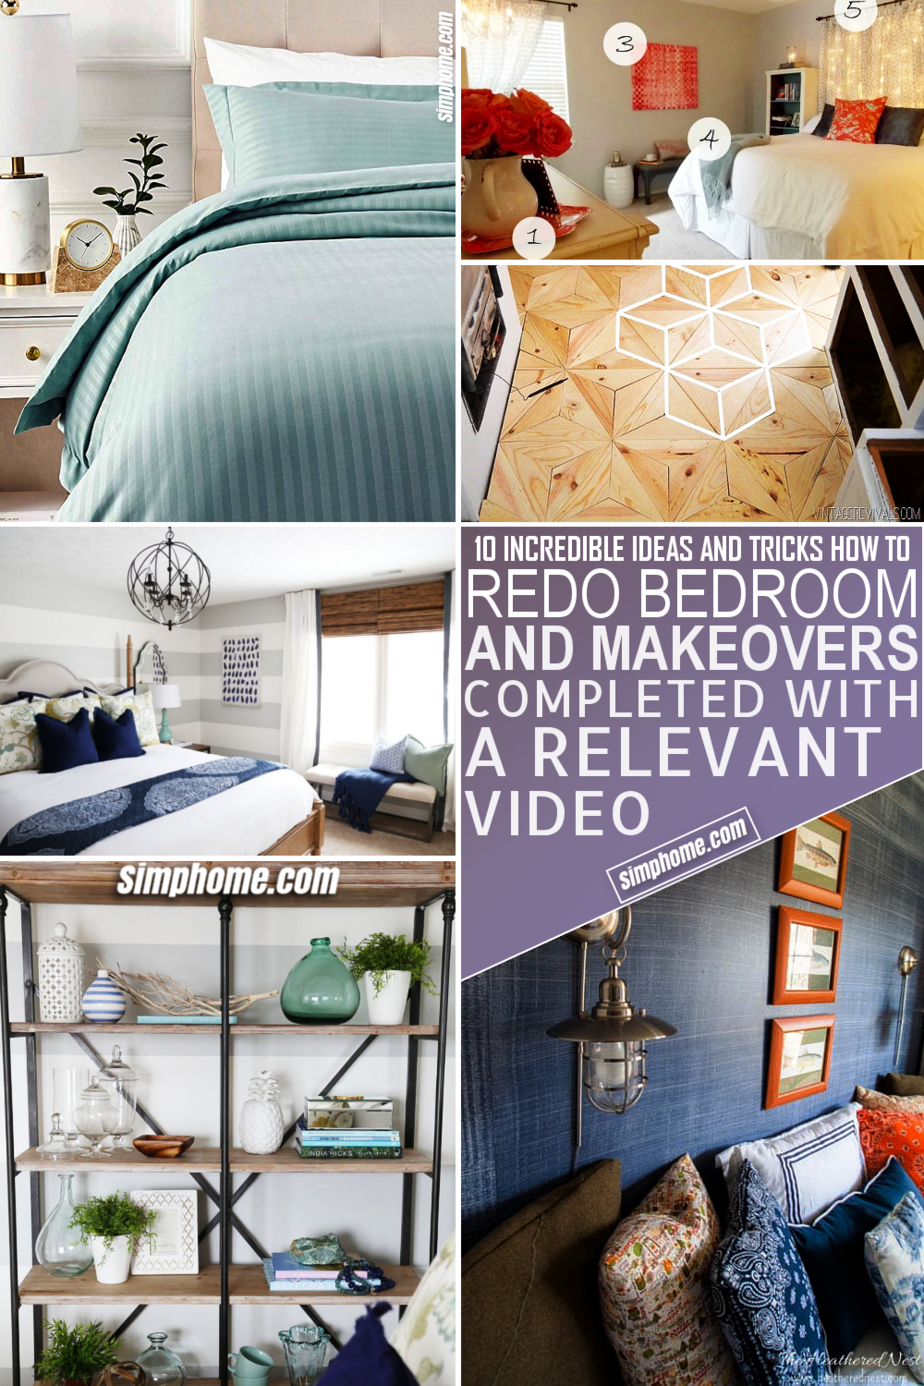 10 Bedroom Redo Ideas via Simphome.com Featured Image